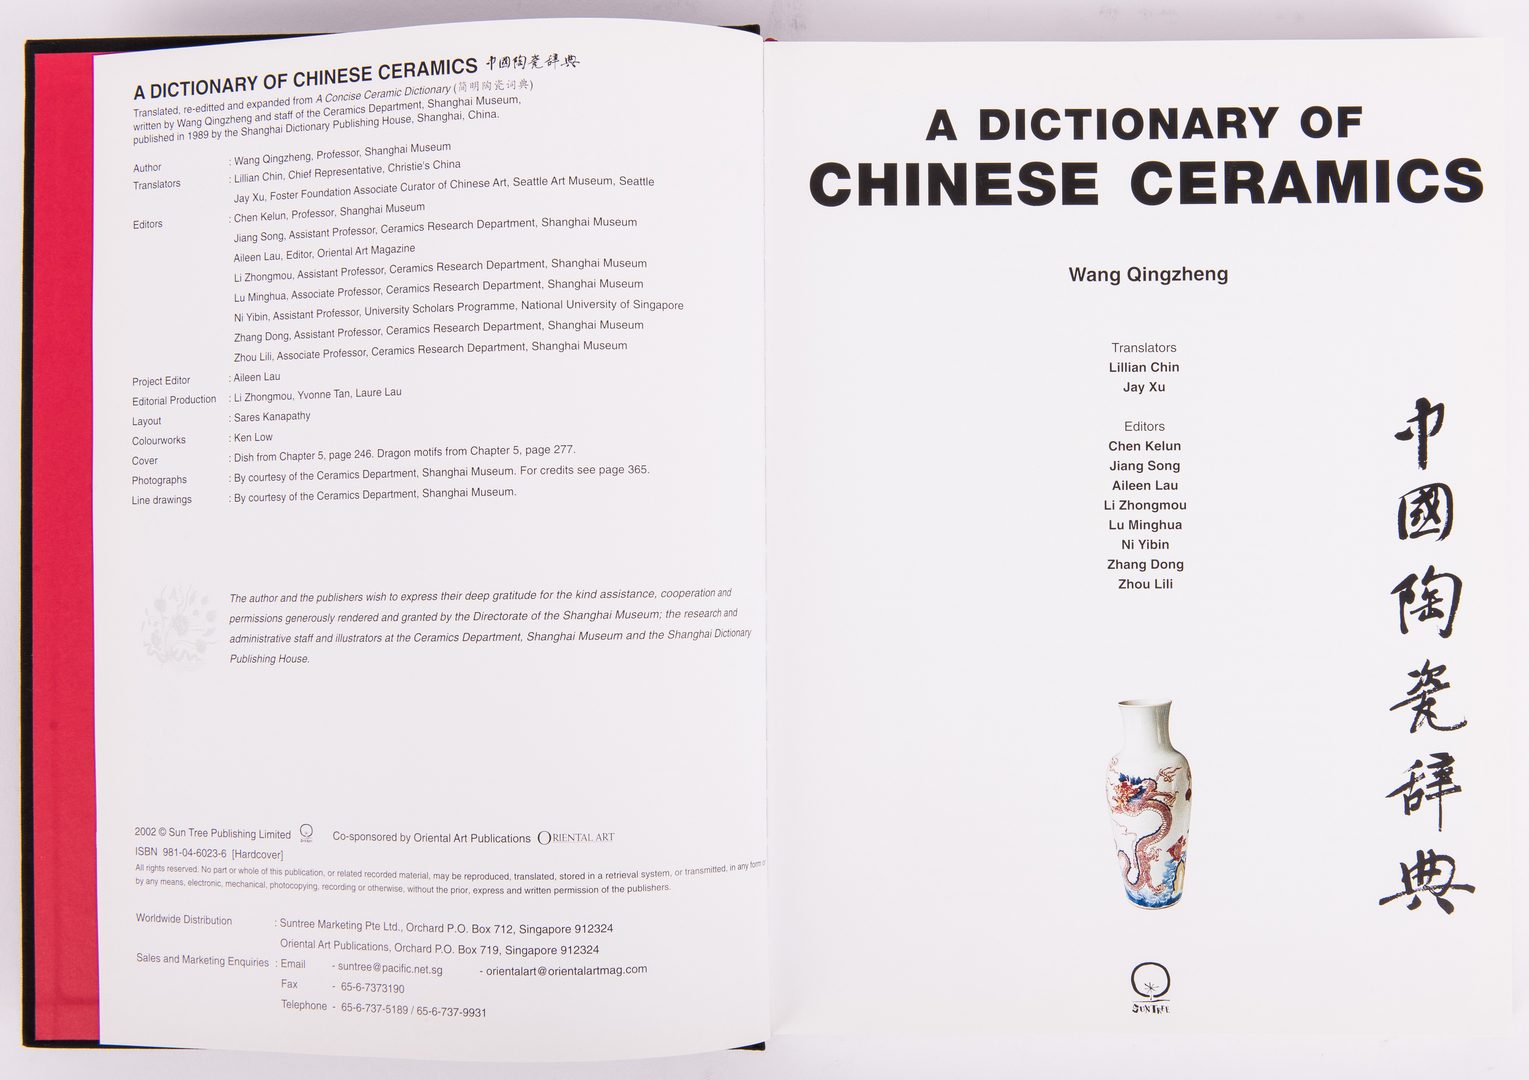 Lot 390: Wang Qing Zheng, Dictionary of Chinese Ceramics